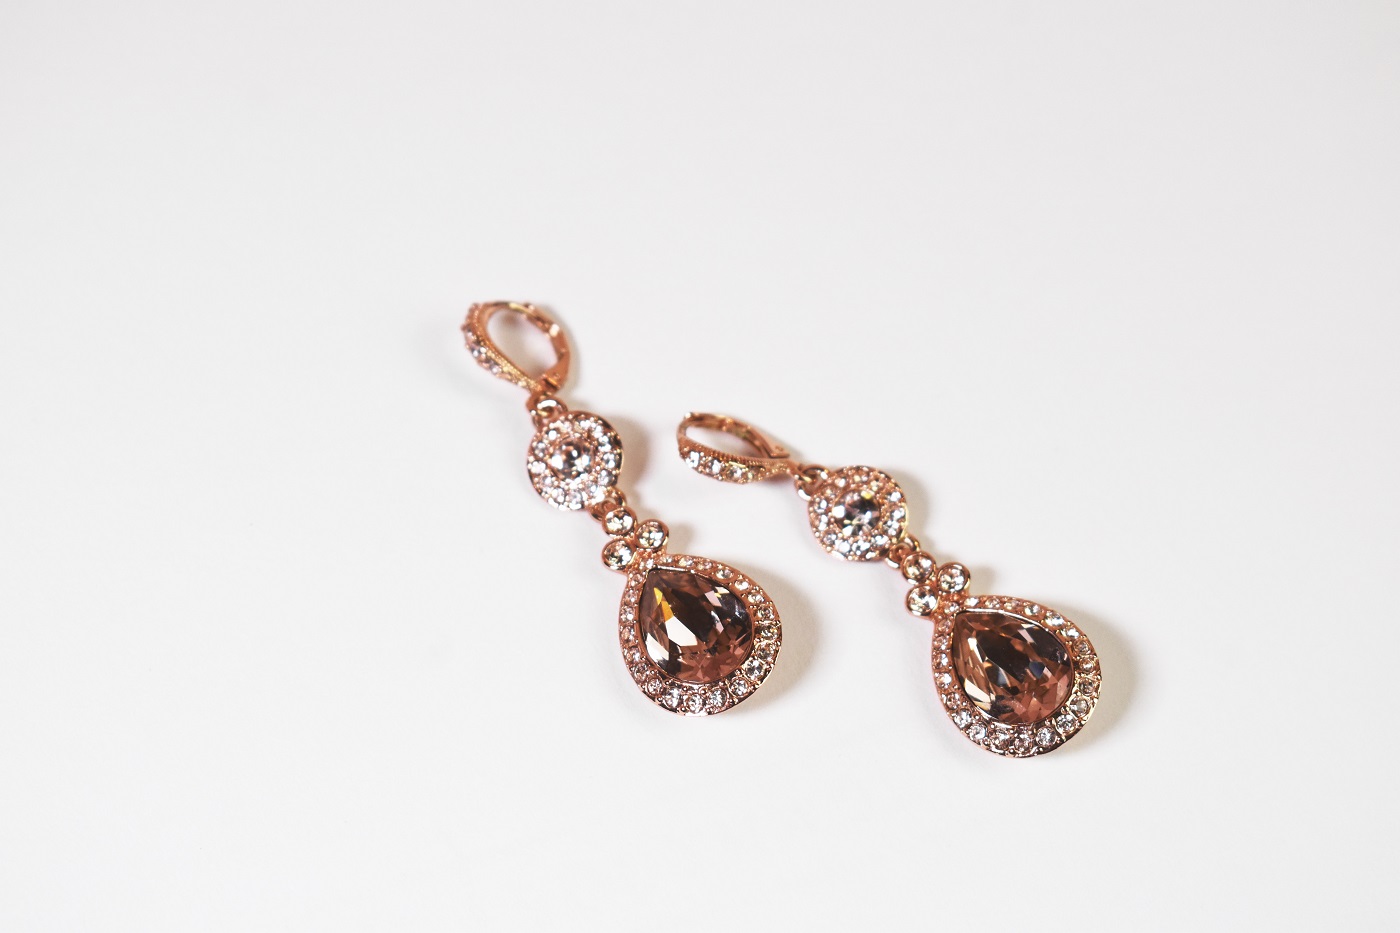 A pair of glittery earrings